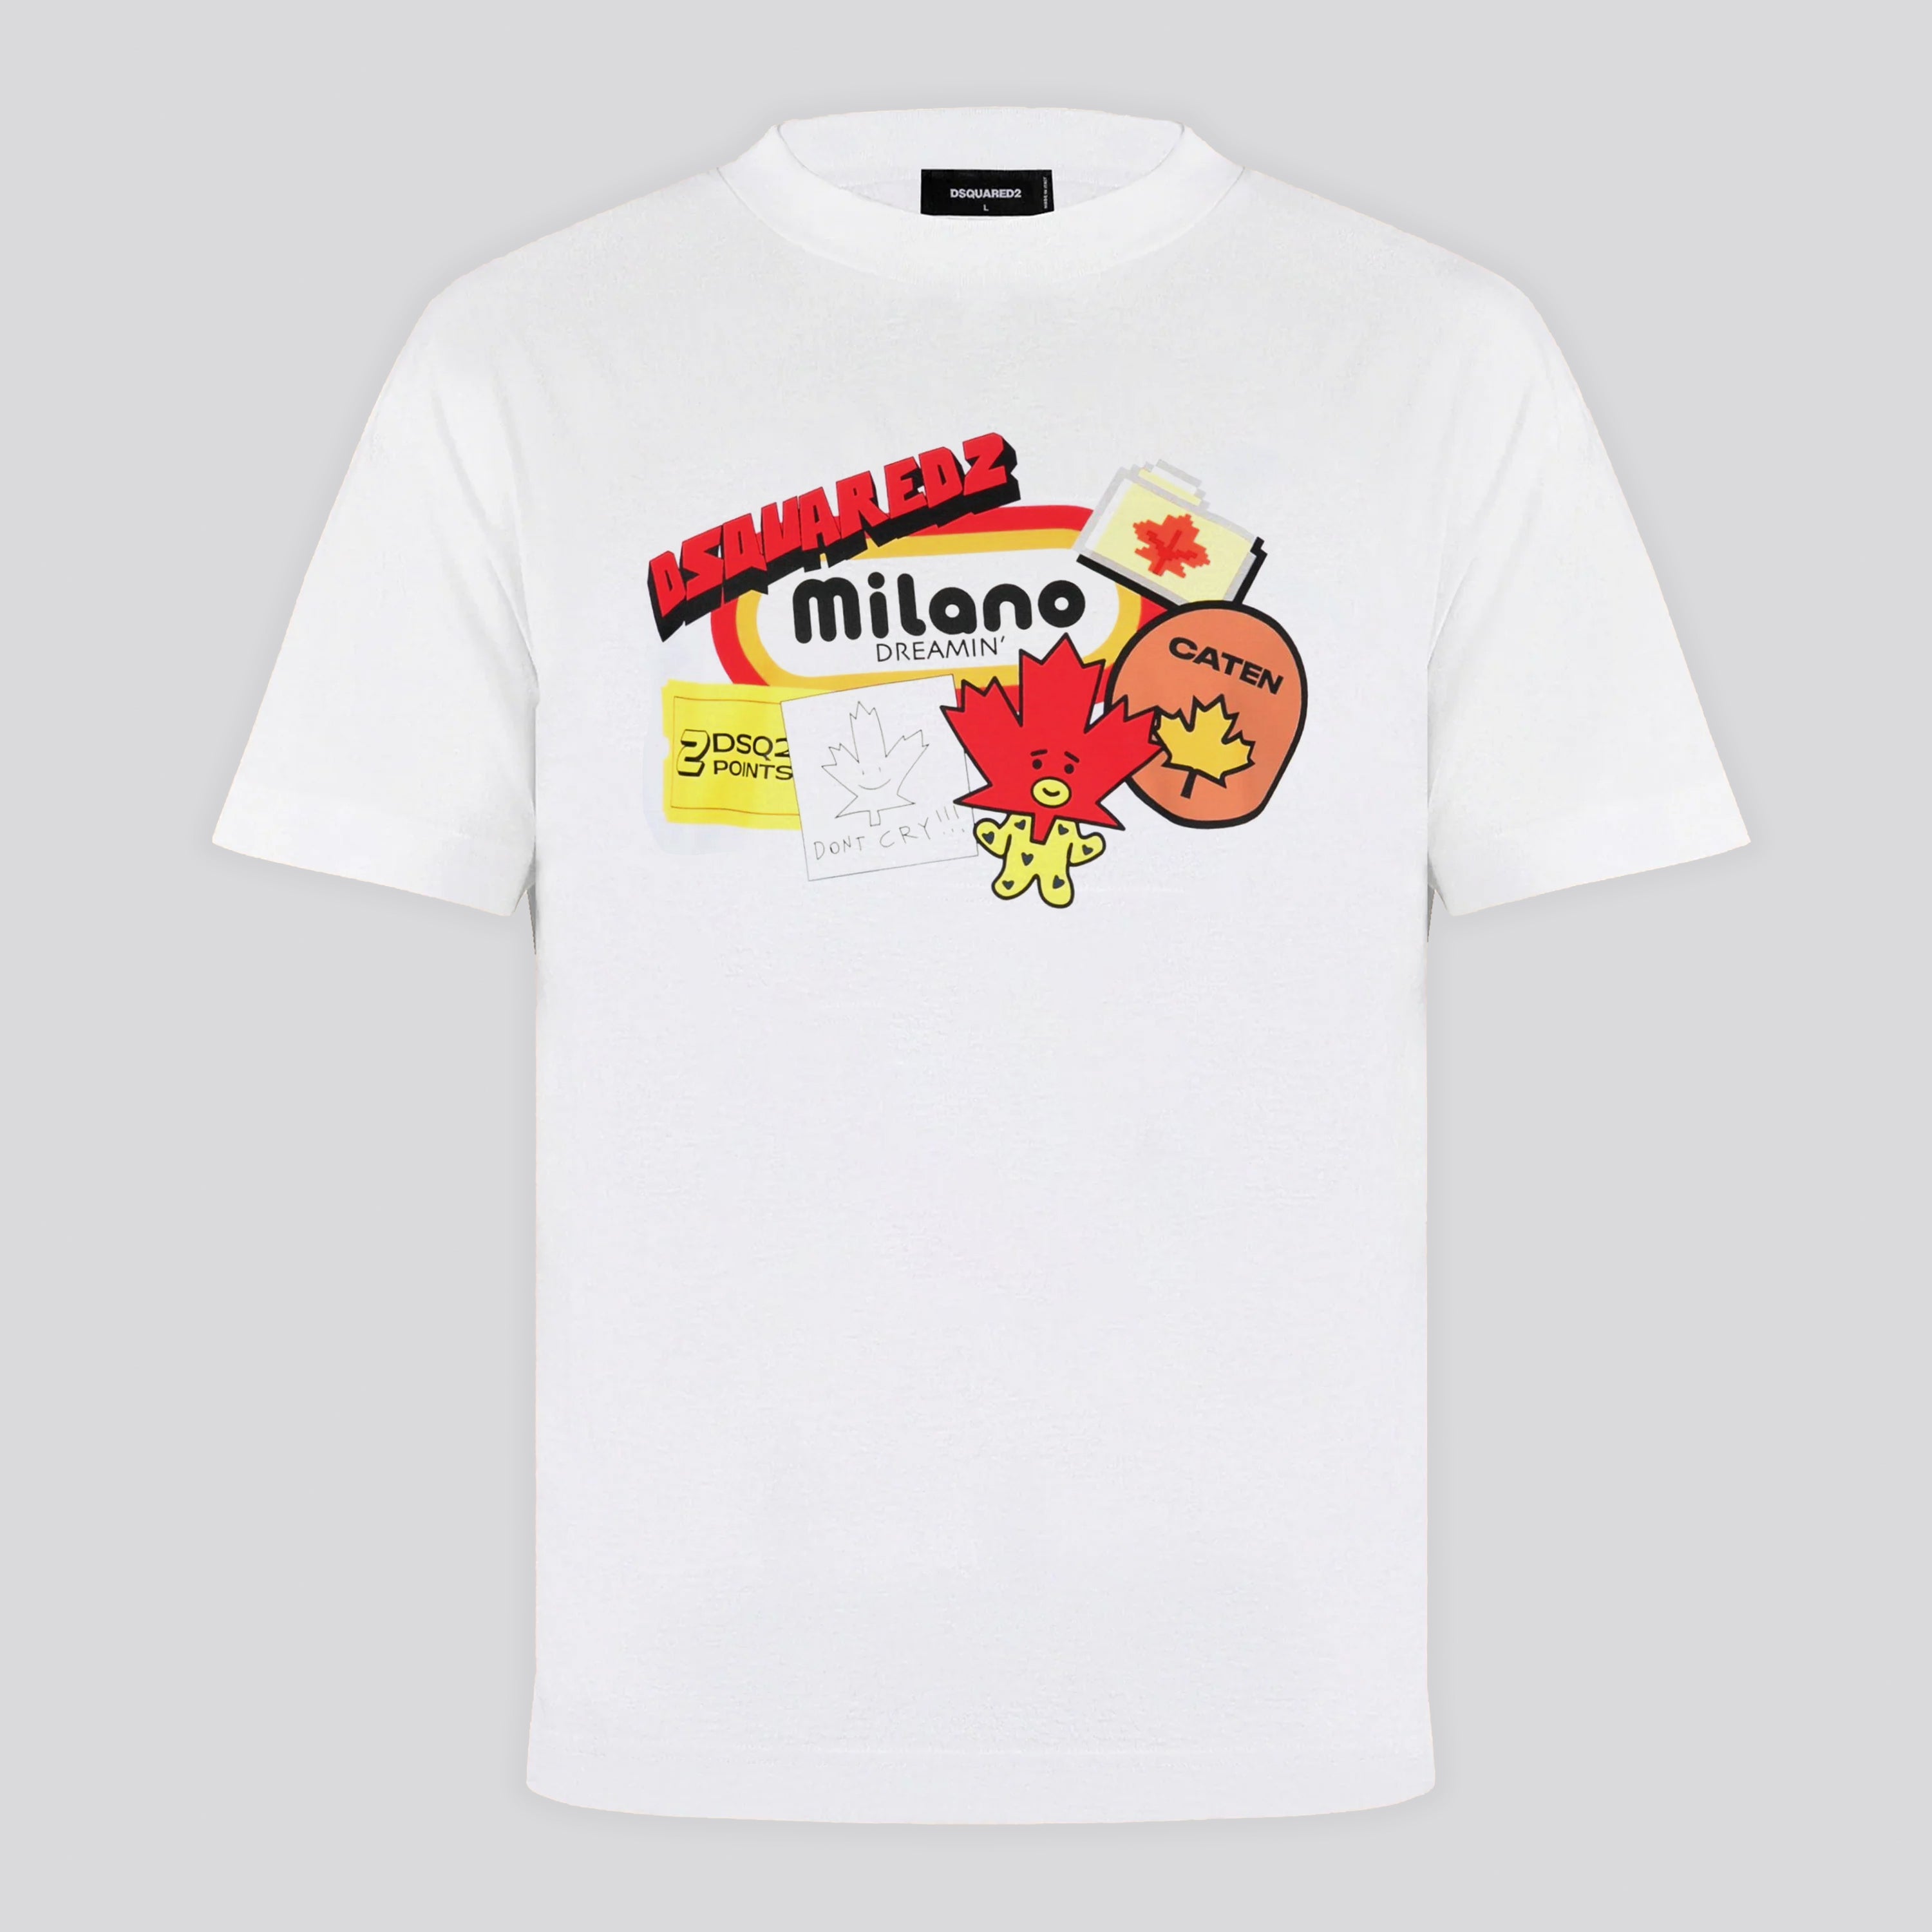 Camiseta Blanca Dsquared2 Milano Dreamin